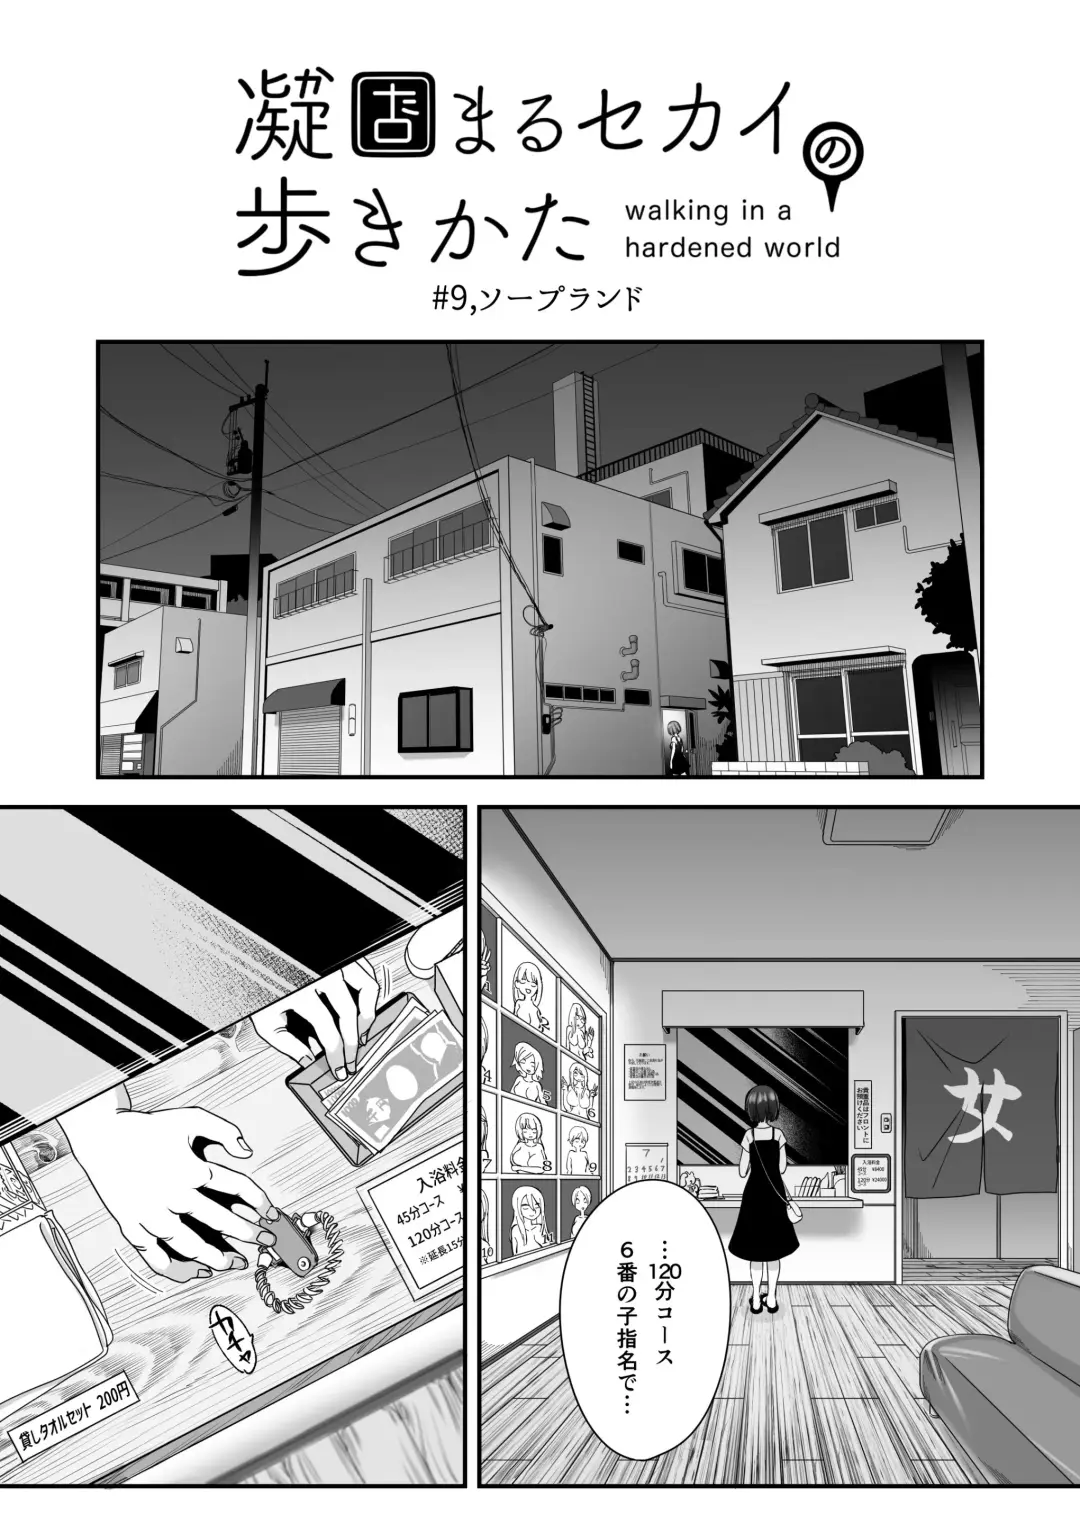 [Archipelago] Katamaru Sekai no Arukikata - walking in a hardened world #9 Fhentai.net - Page 2